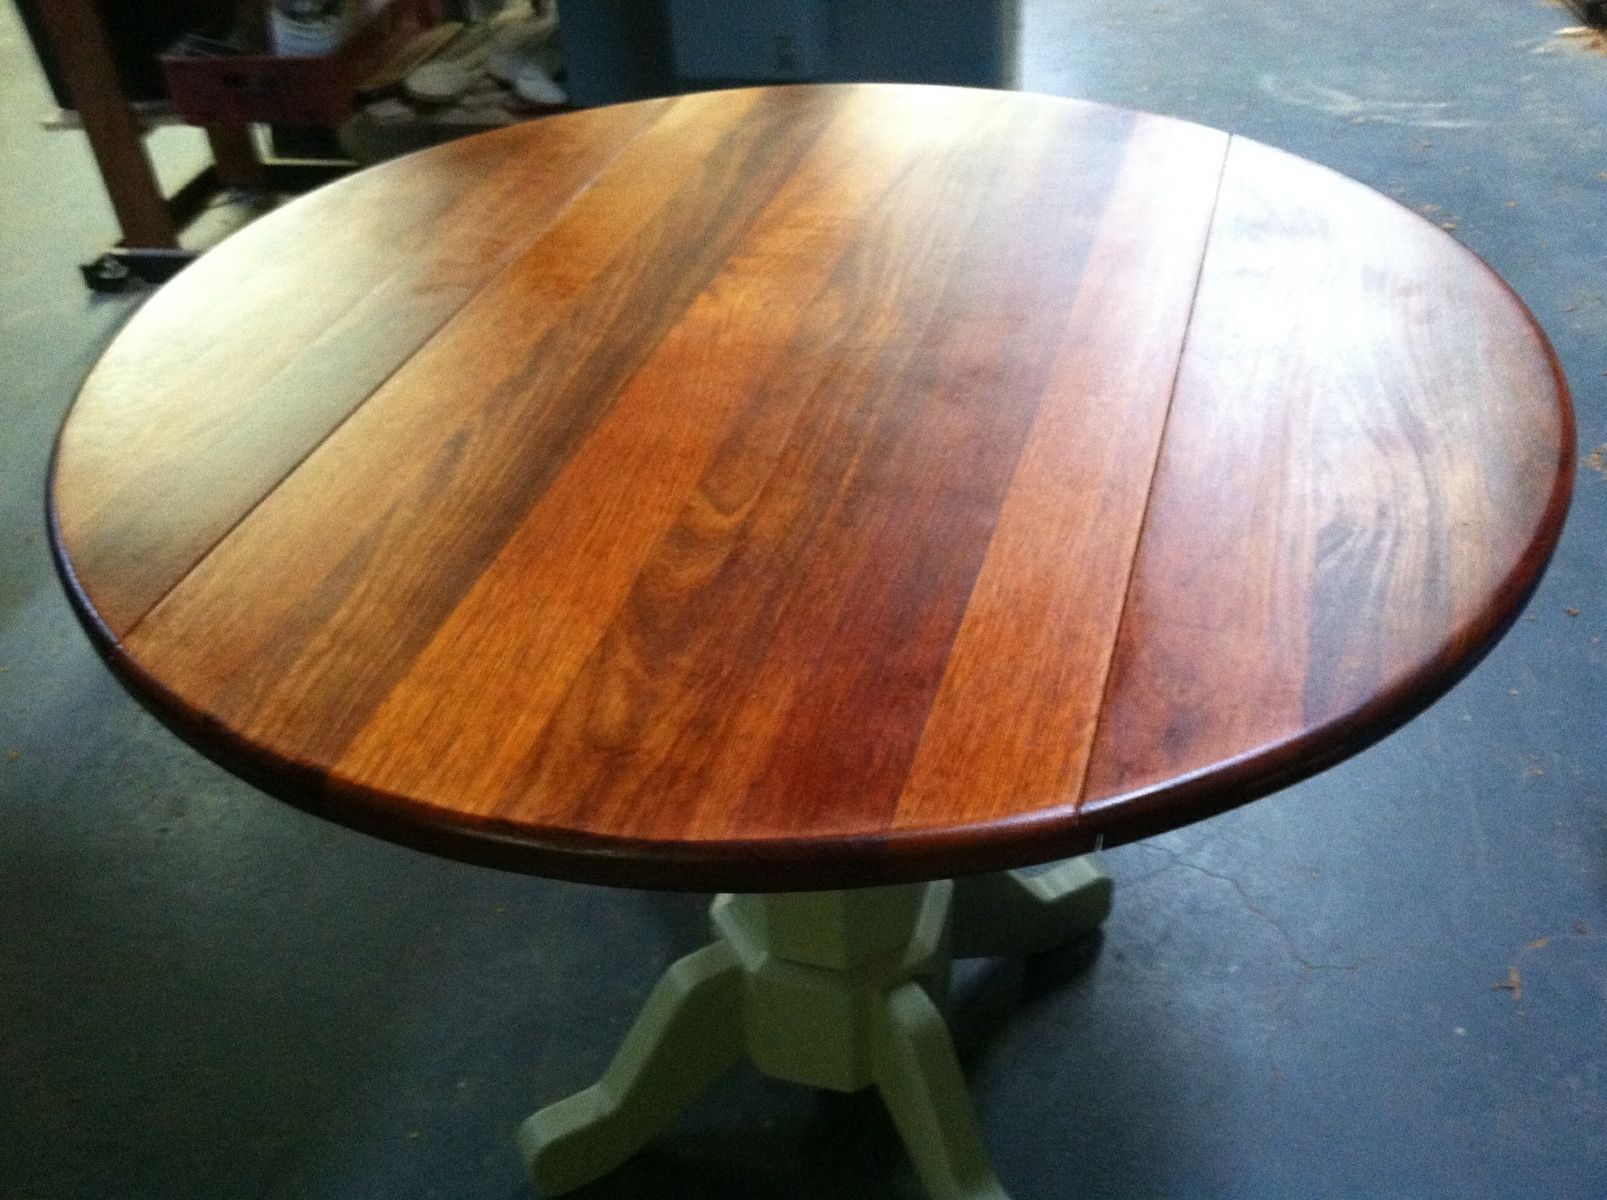 Handmade Round Drop Leaf Table by Strafford Fine Furniture | CustomMade.com